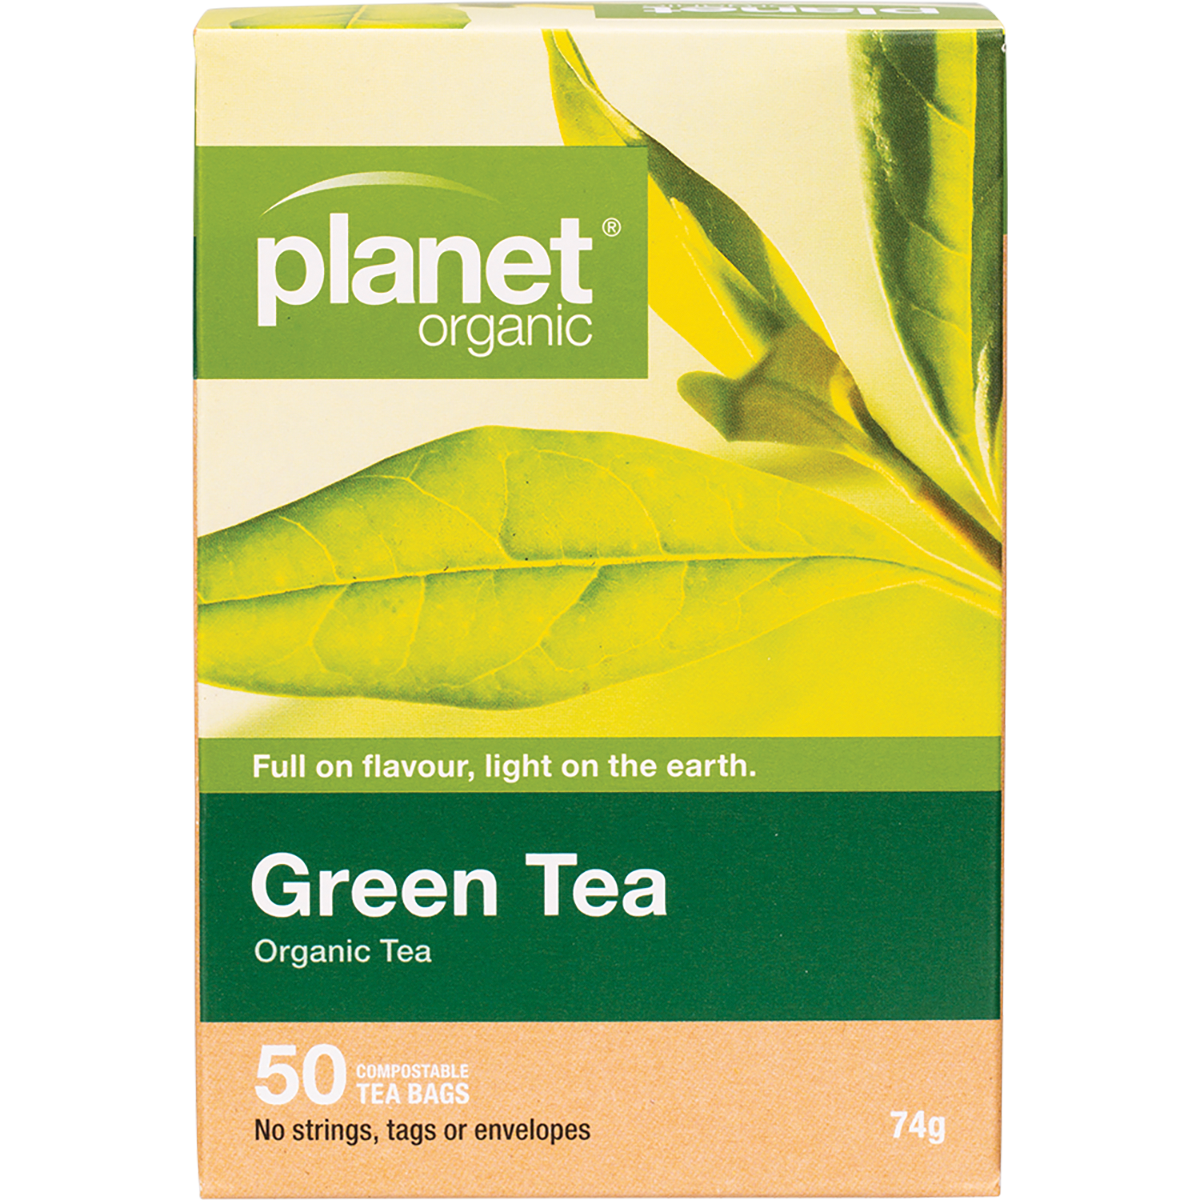 planet organic green tea bags, organic tea, compostable tea bags